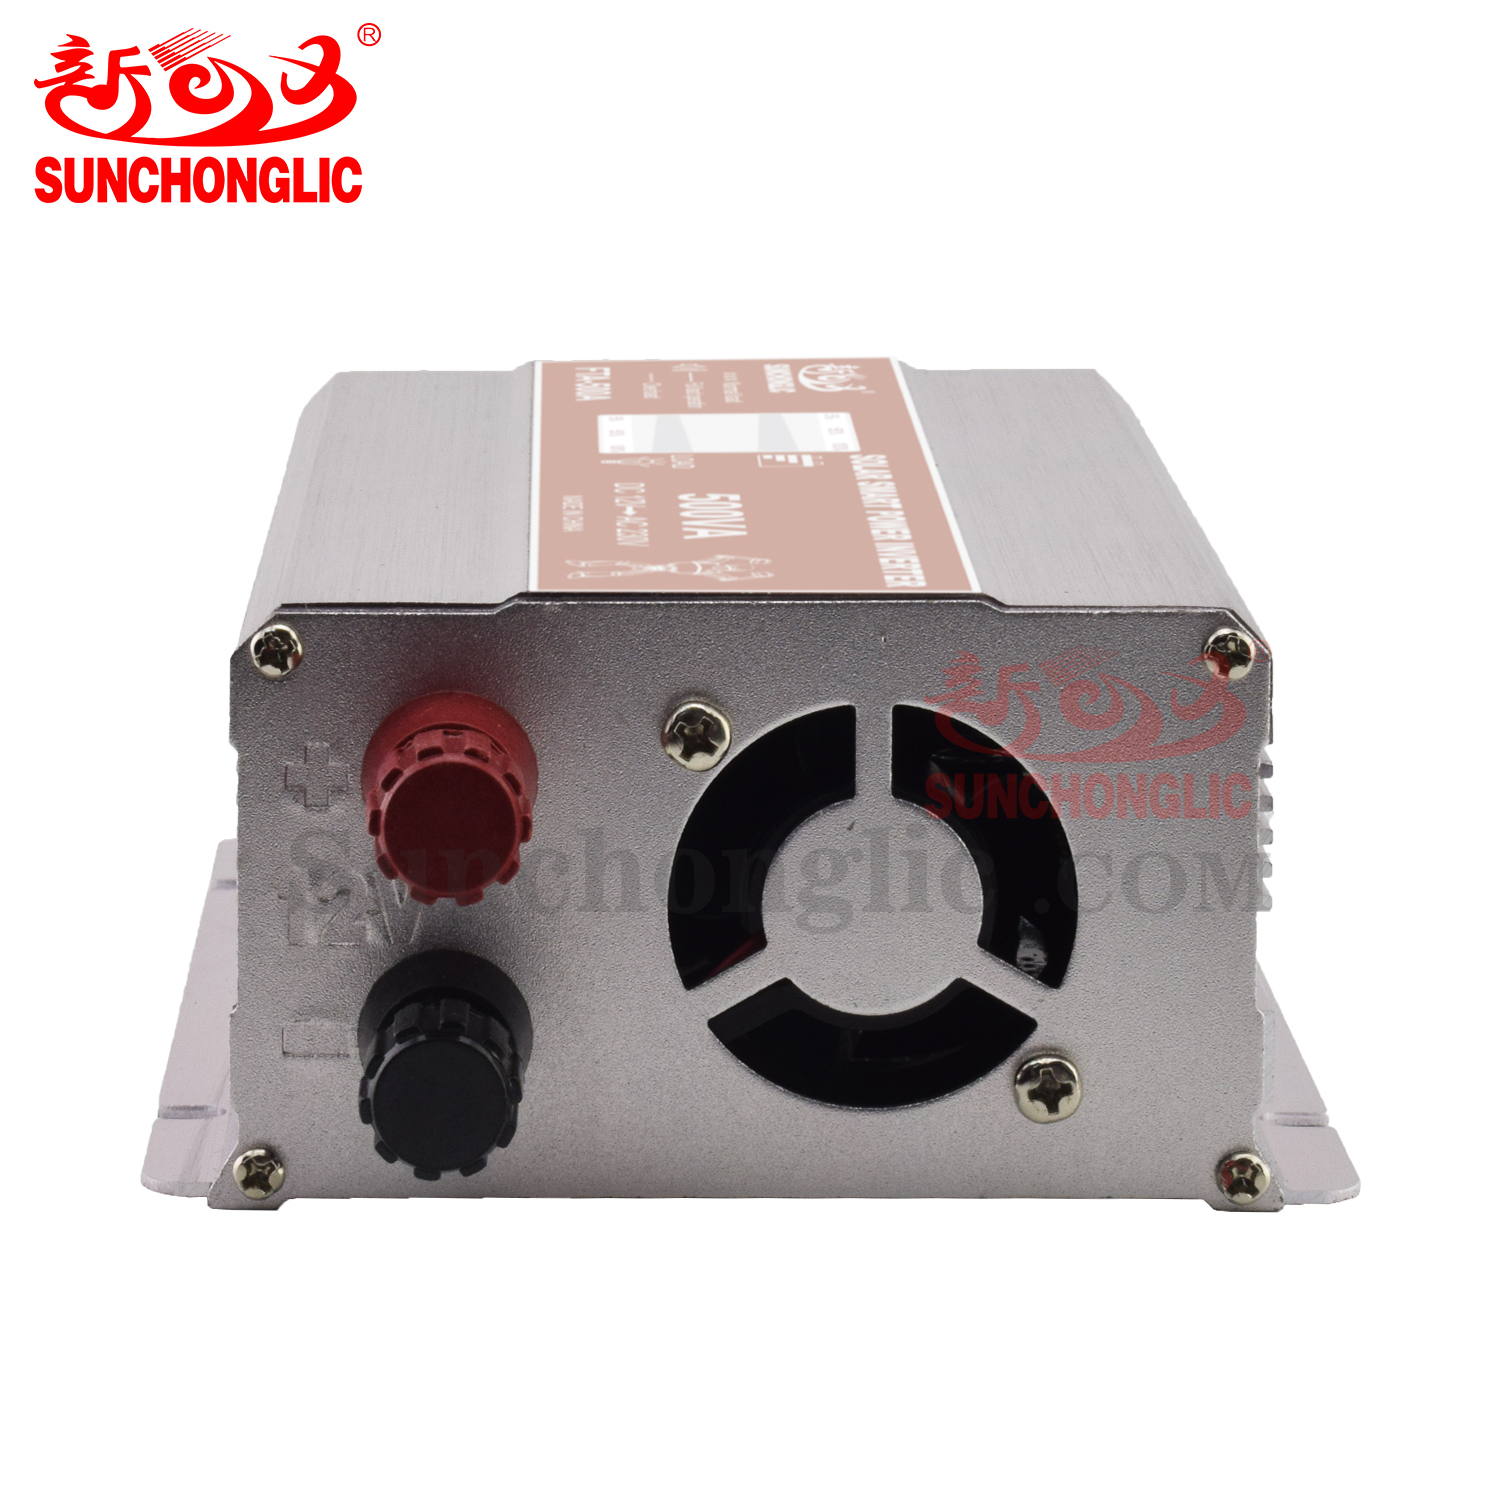 FTA-500A - Modified Sine Wave Inverter - Foshan Sunchonglic Electric  Appliance Co., Ltd.